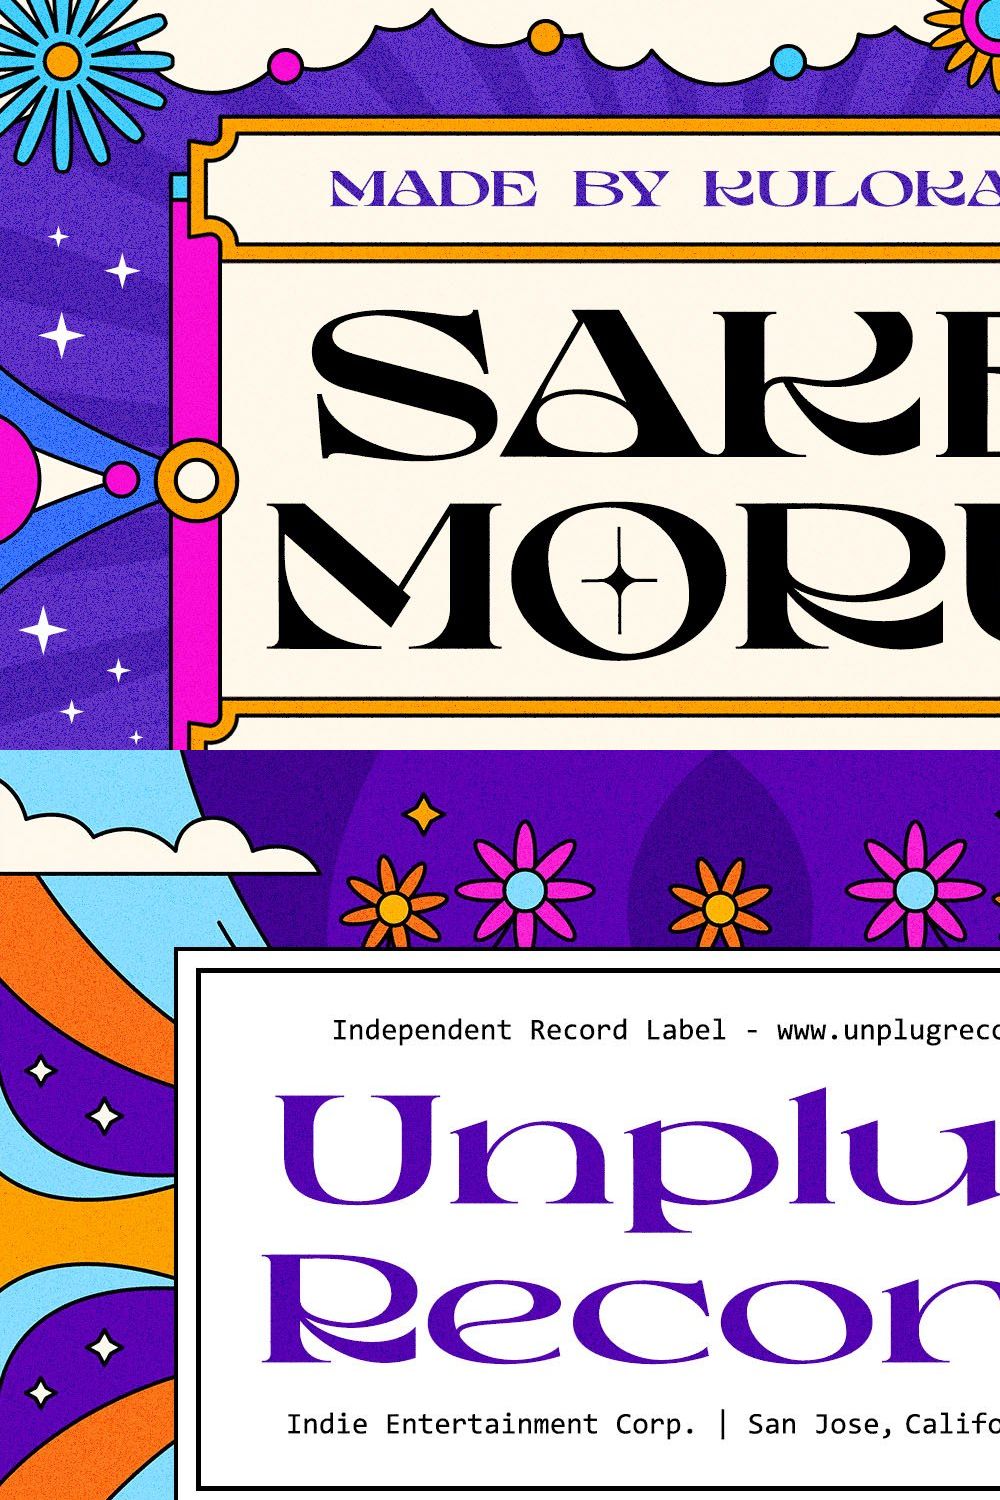 Sake Moru Display Font pinterest preview image.